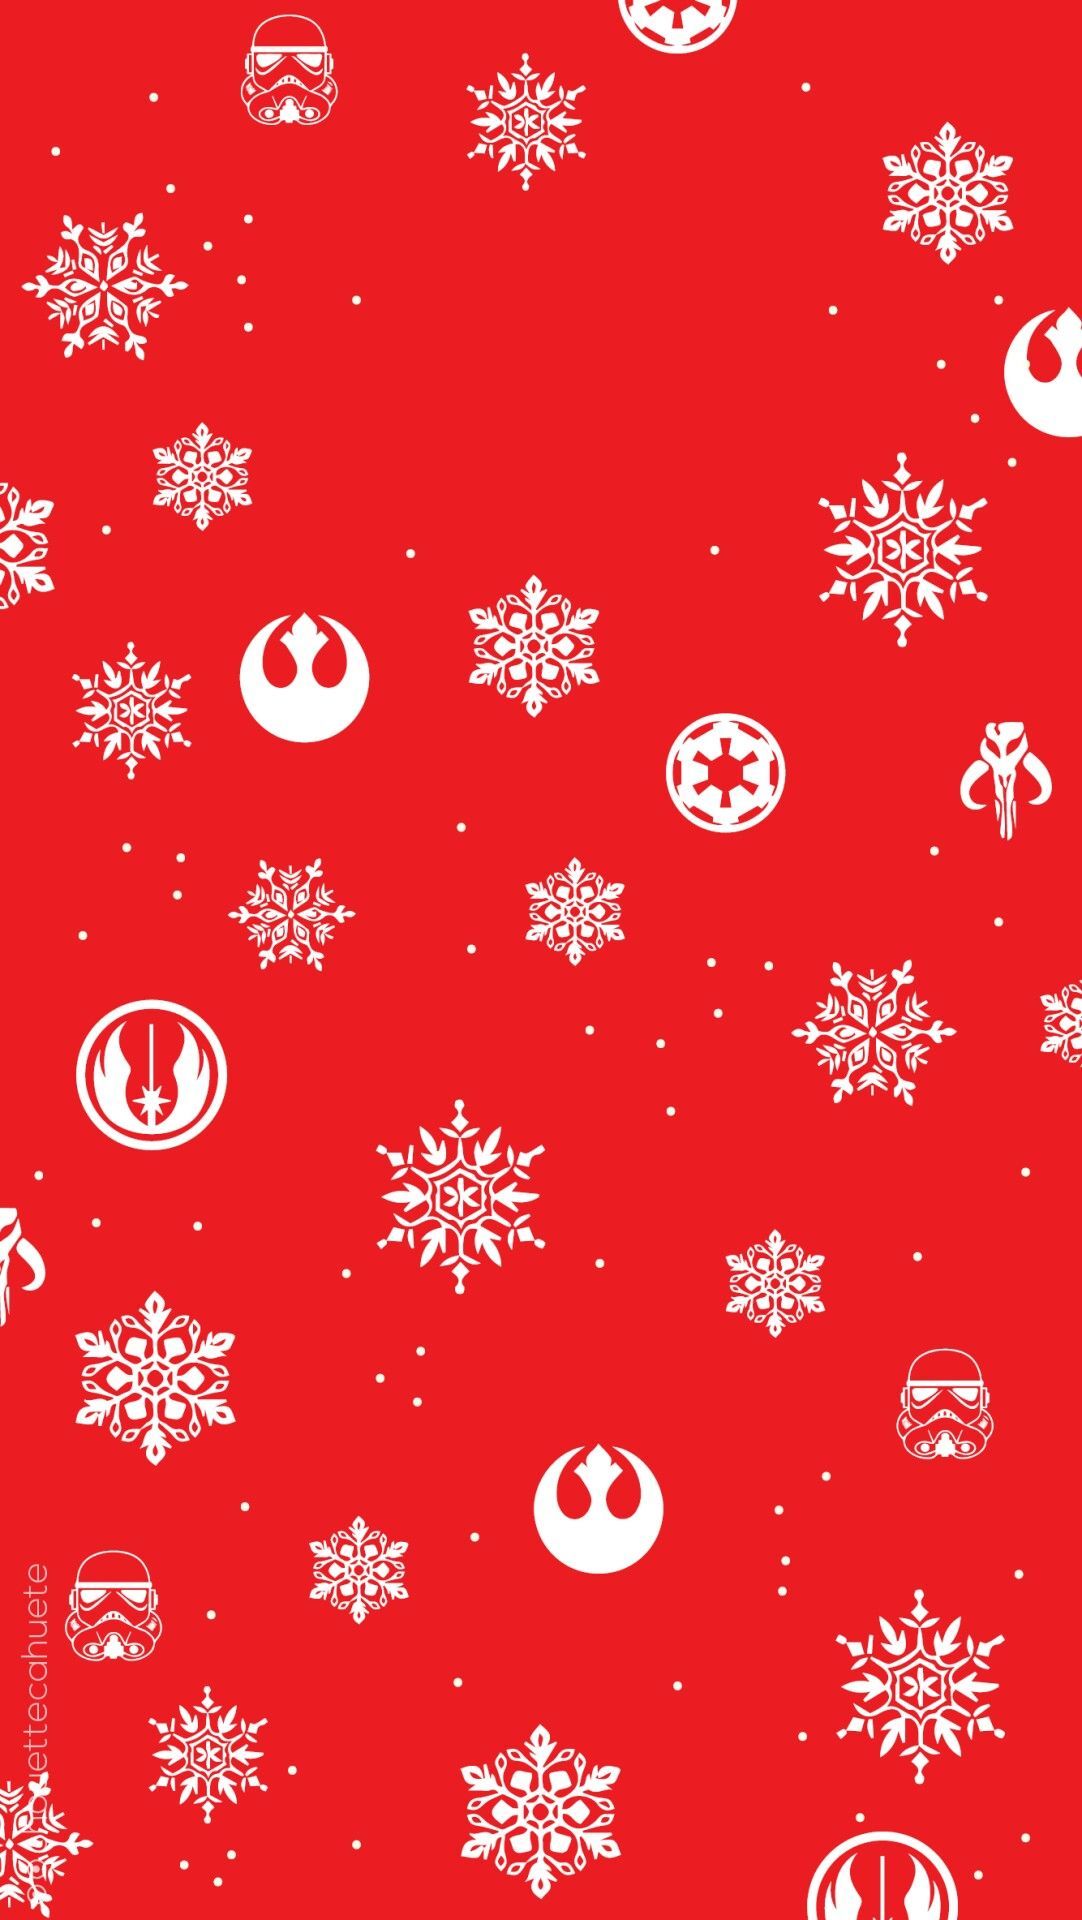 Christmas star wars. Star wars wallpaper, Star wars wallpaper iphone, Star wars background